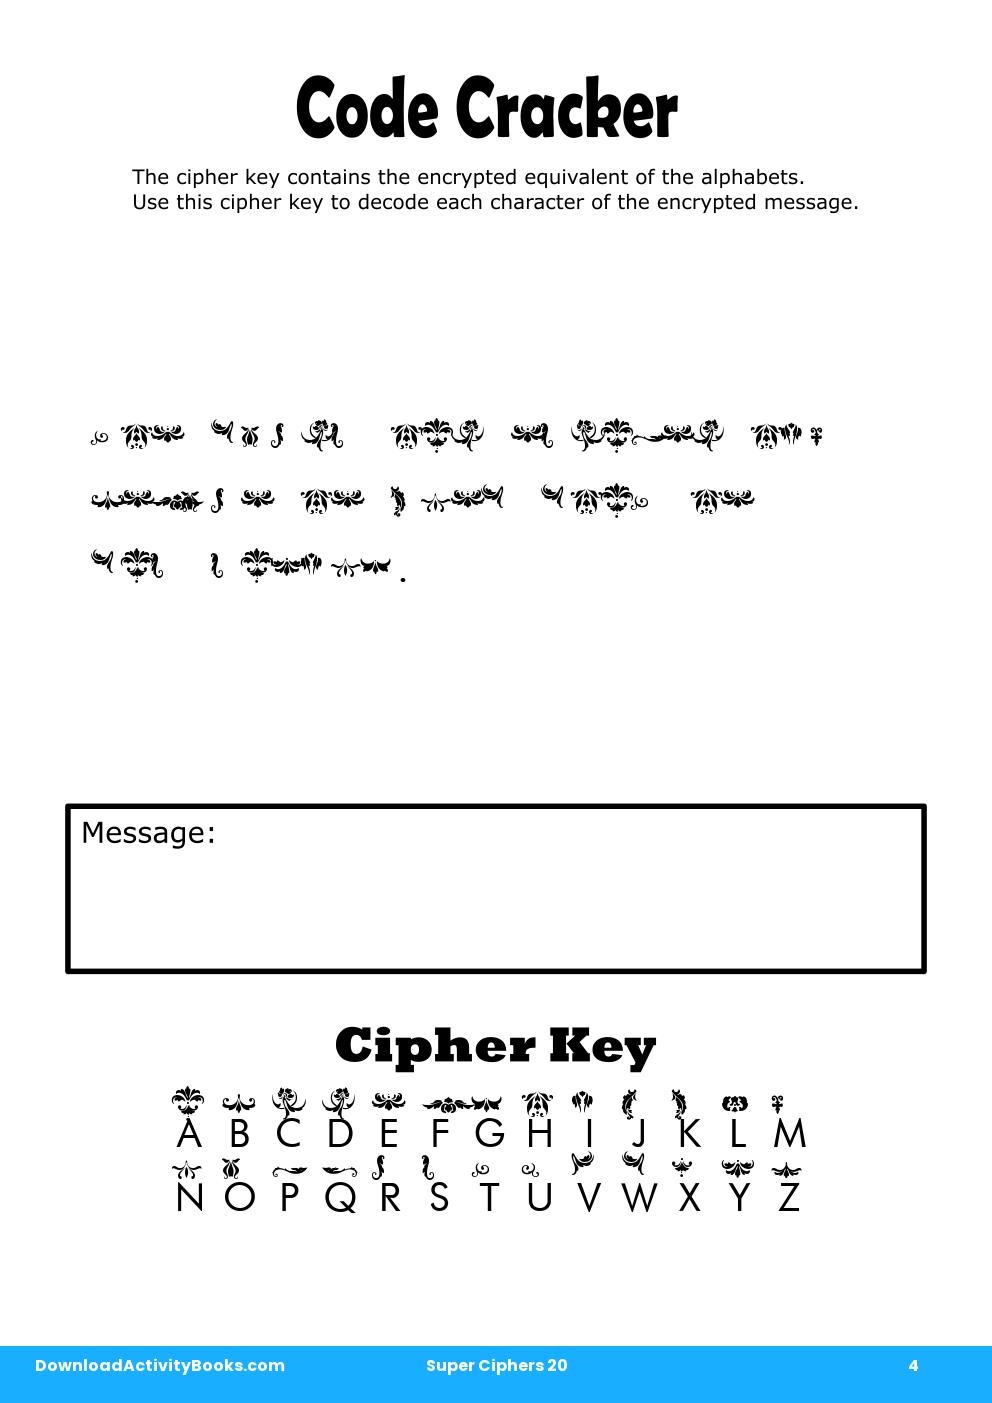 Code Cracker in Super Ciphers 20